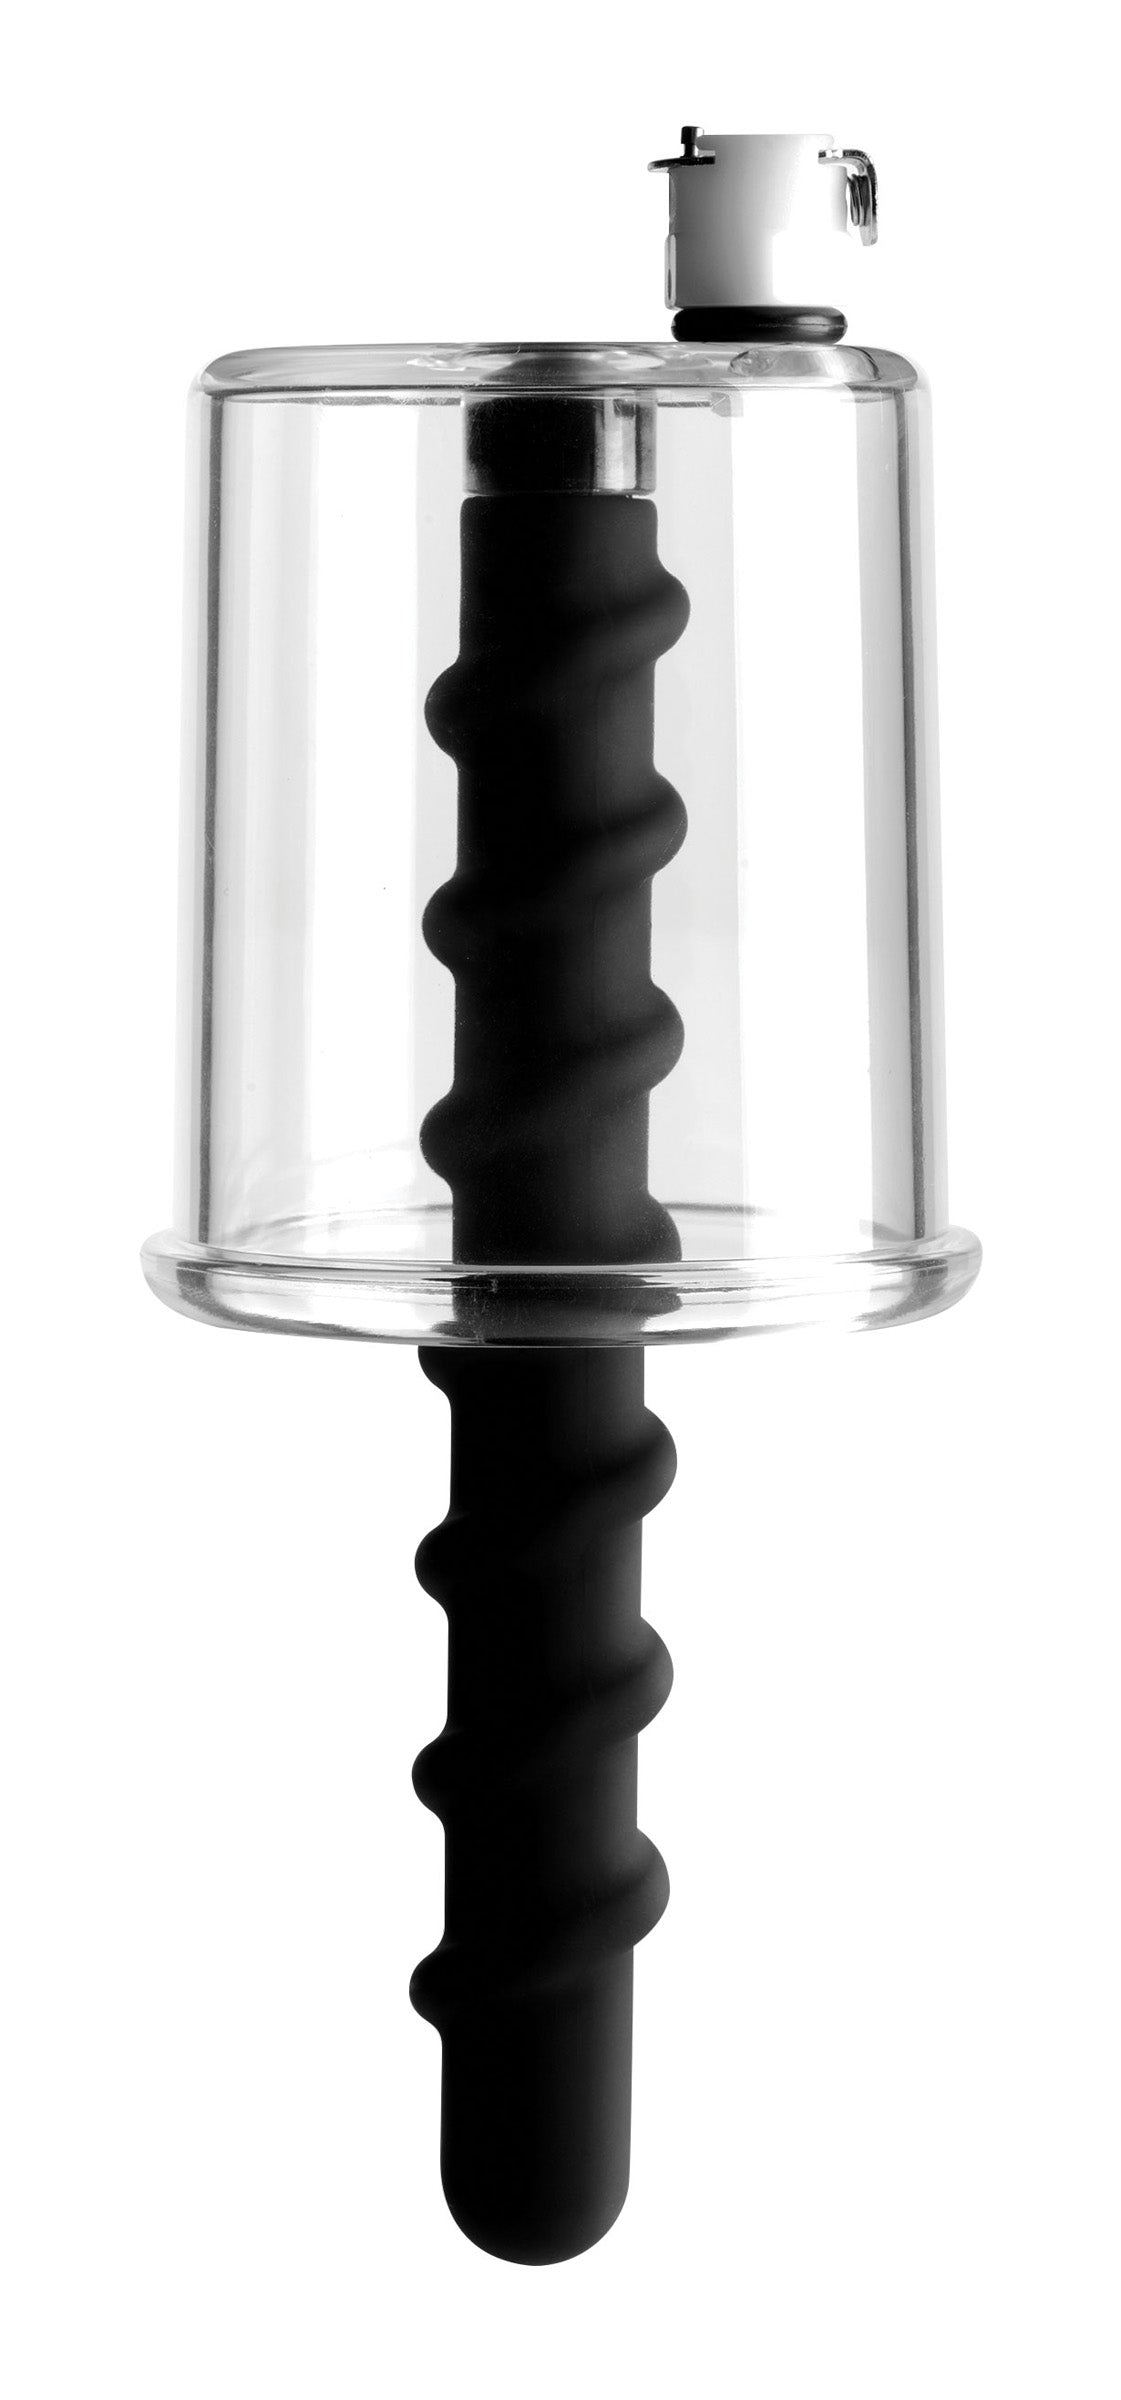 Rosebud Driller Cylinder with Silicone Swirl Insert - UABDSM